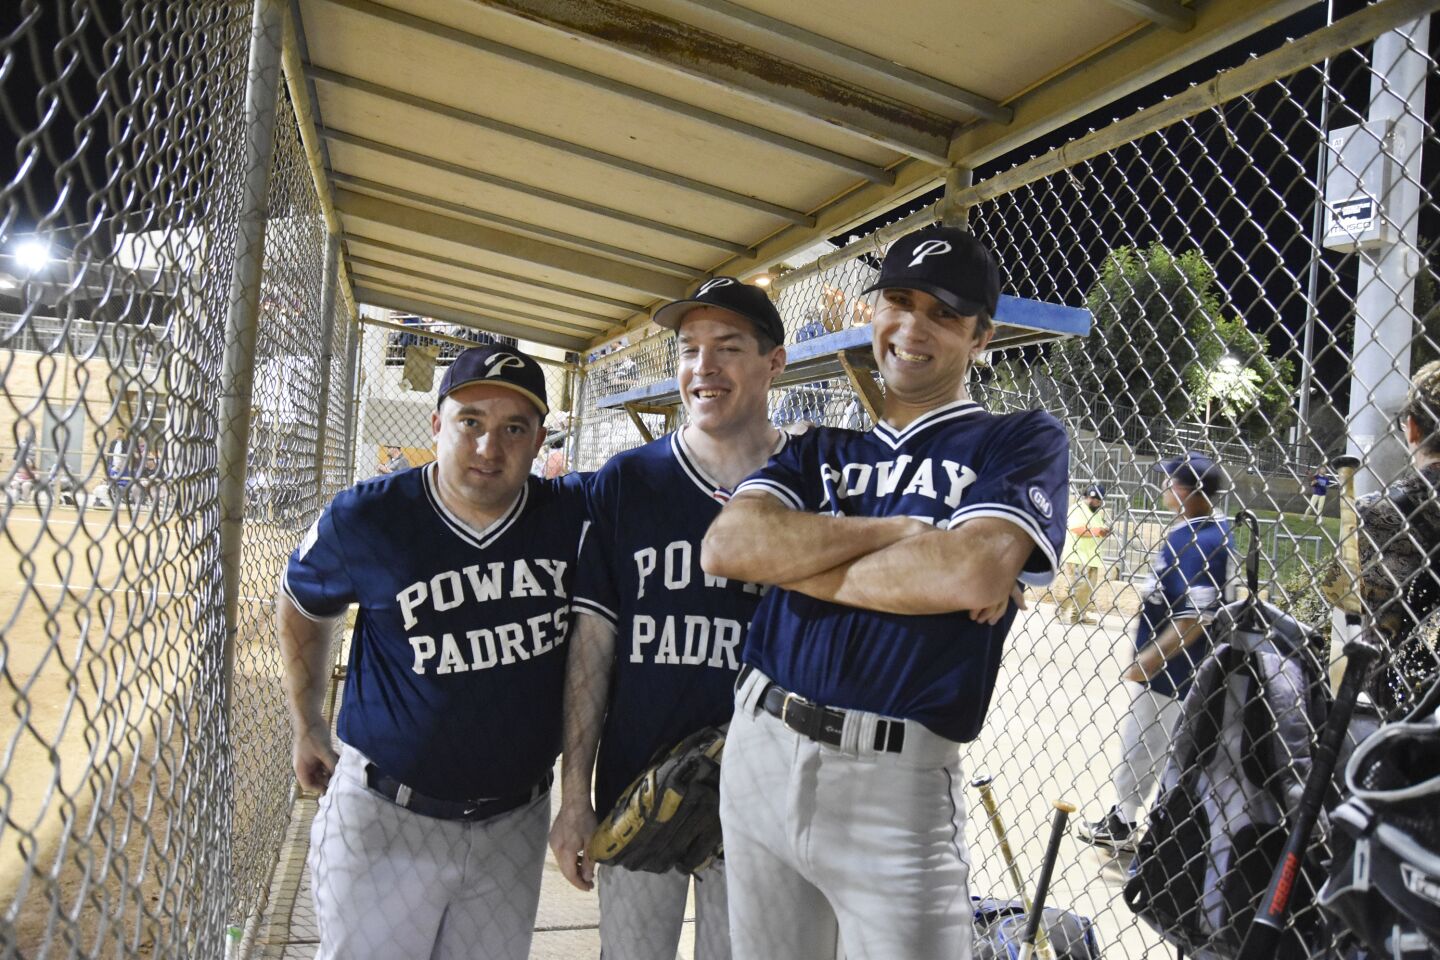 7_111221 Poway Padres Softball Game CYee 0560.JPG